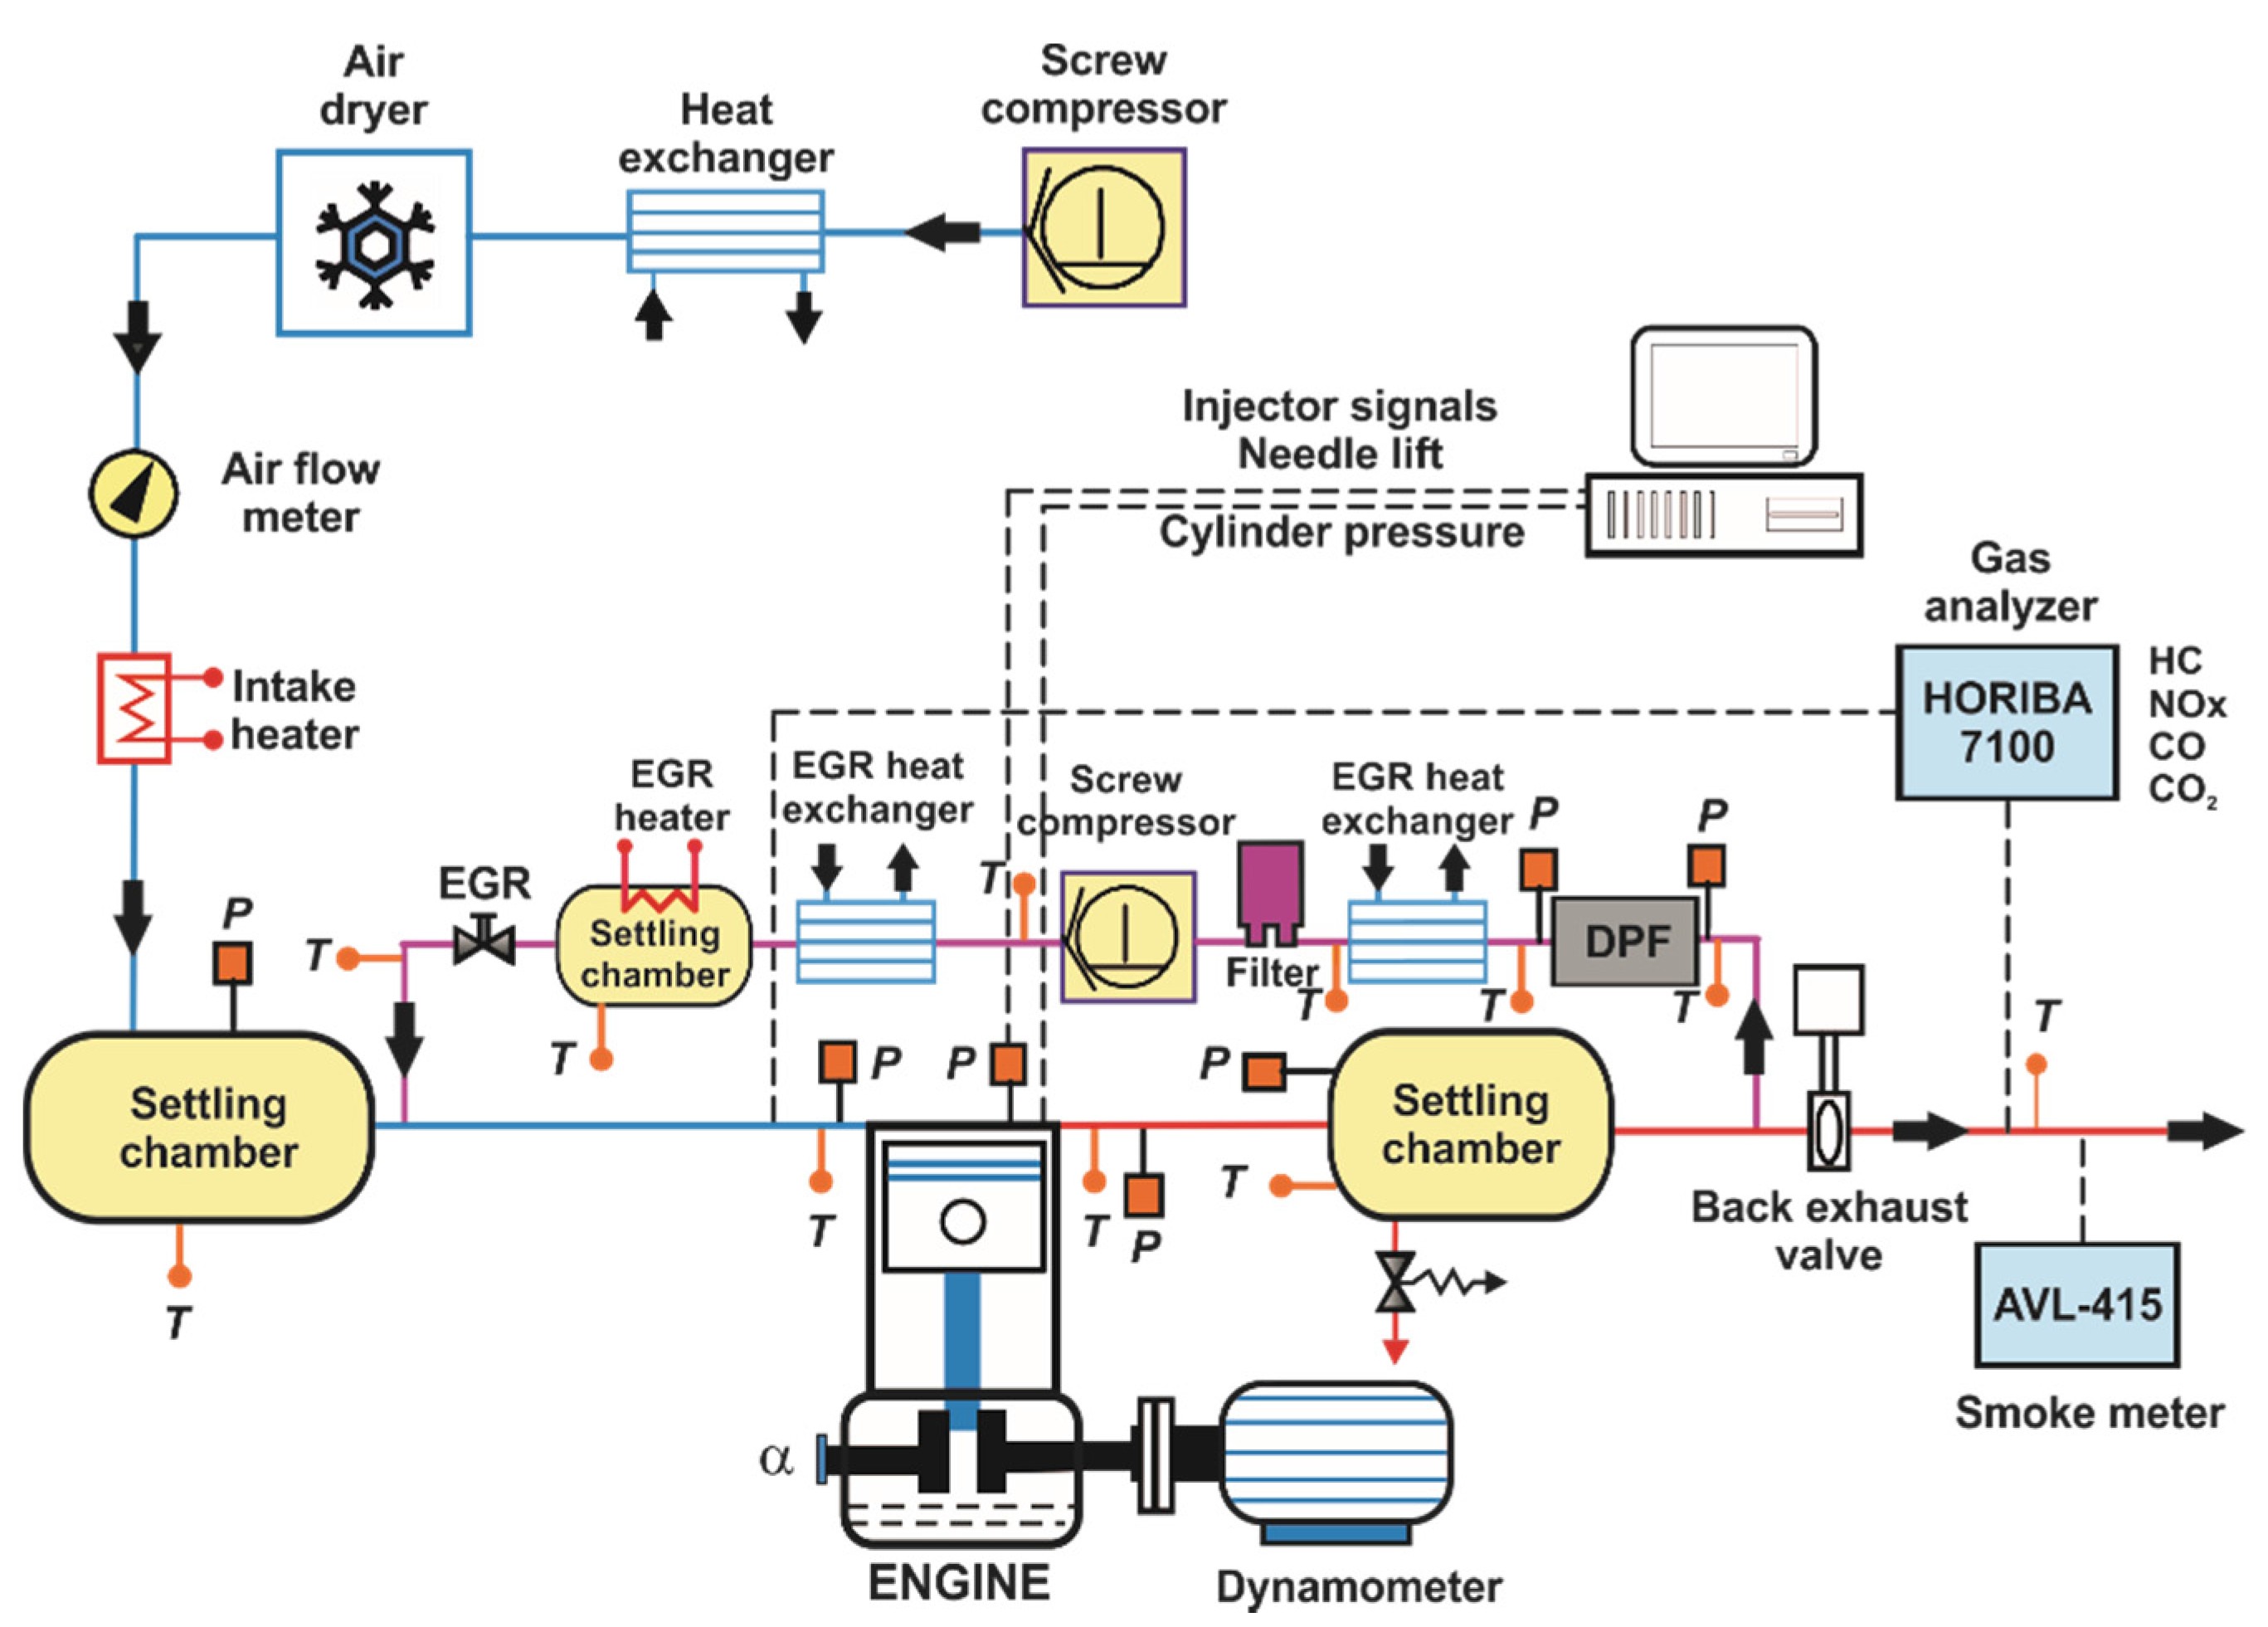 Diesel Engine Fuel System Diagram Applied Sciences Free Full Text Of Diesel Engine Fuel System Diagram